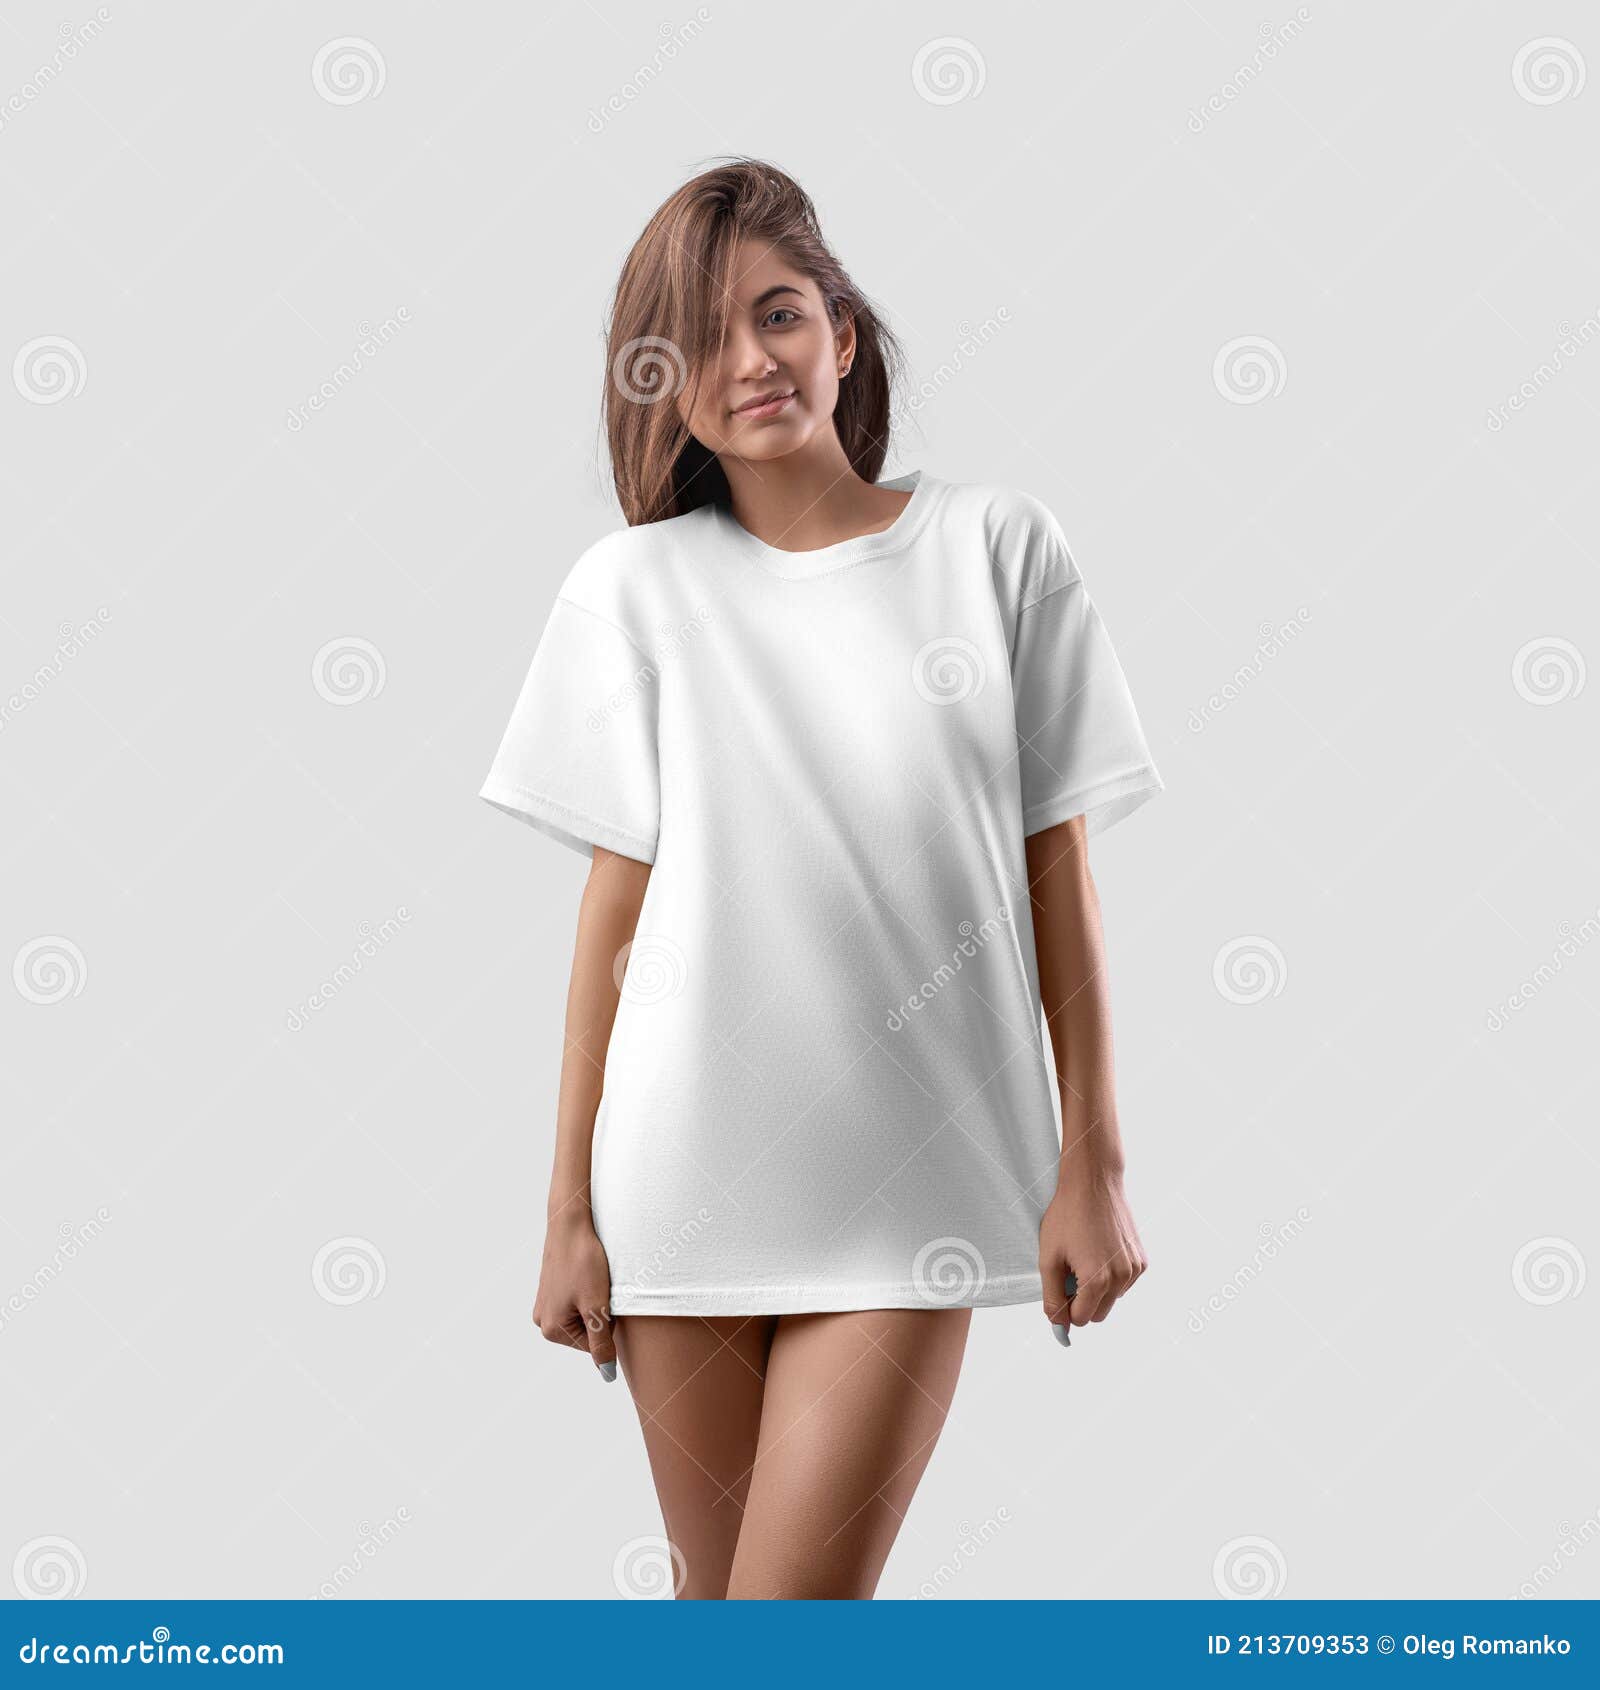 White T-shirt Mockup Girl Stock - Image of concept, hair: 213709353